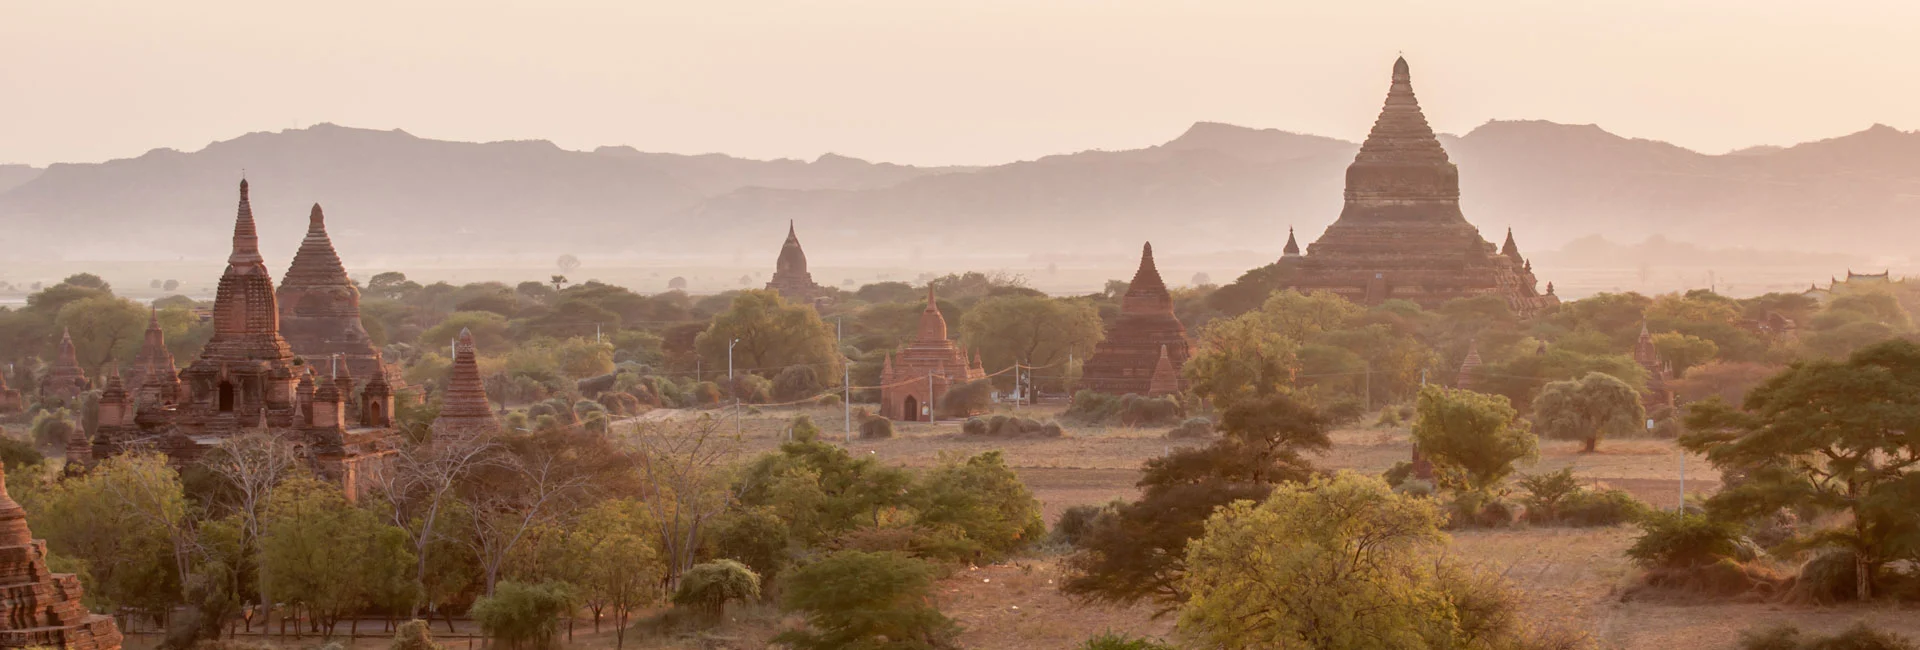 A Glance of Myanmar